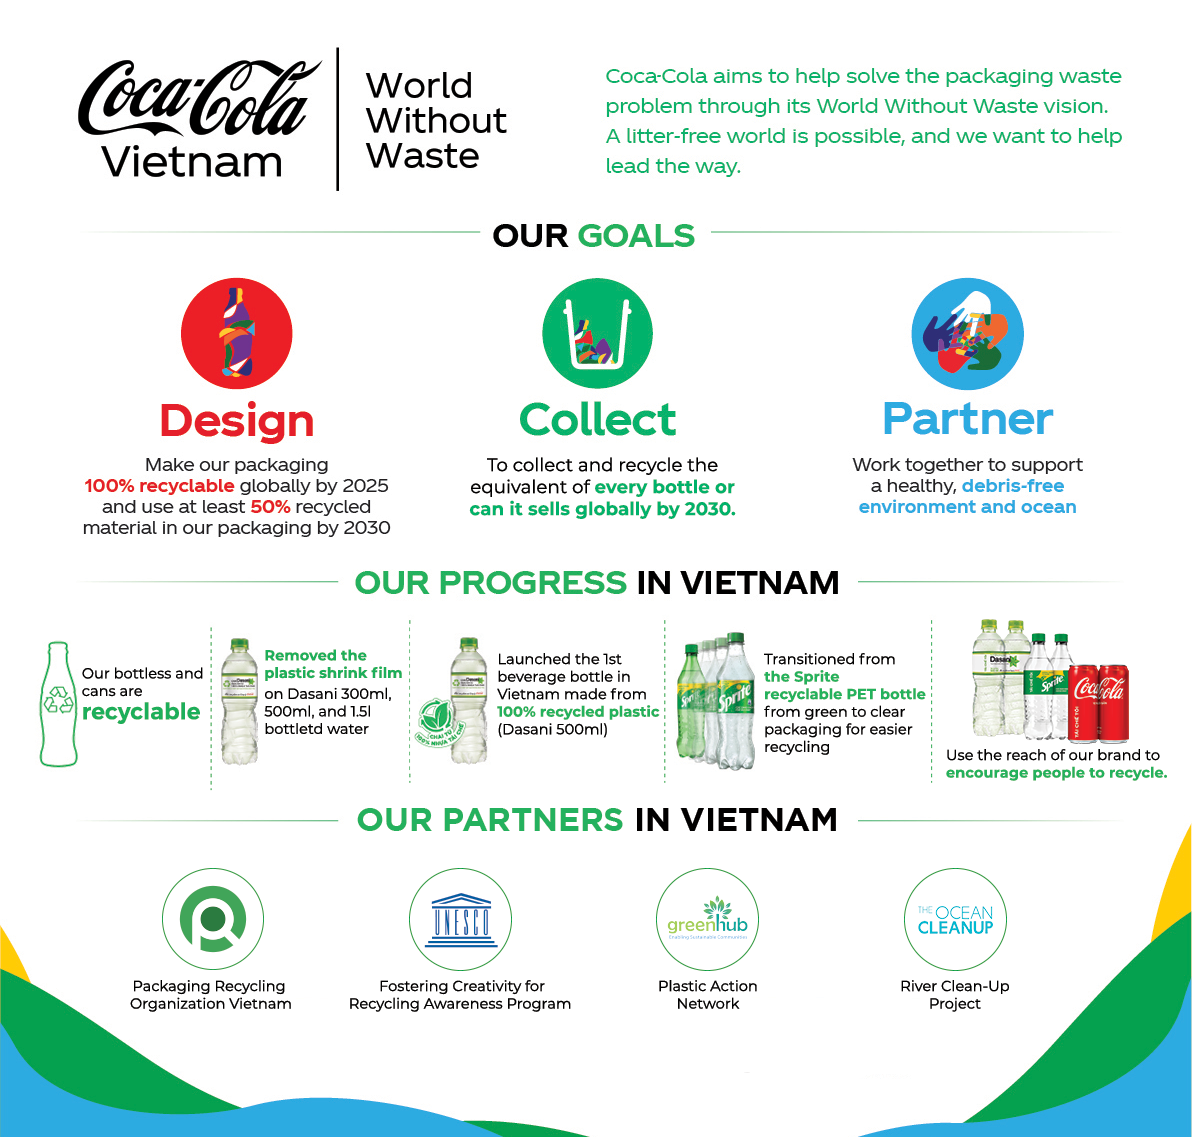 Coca-Cola honoured in top 3 most sustainable companies in Vietnam